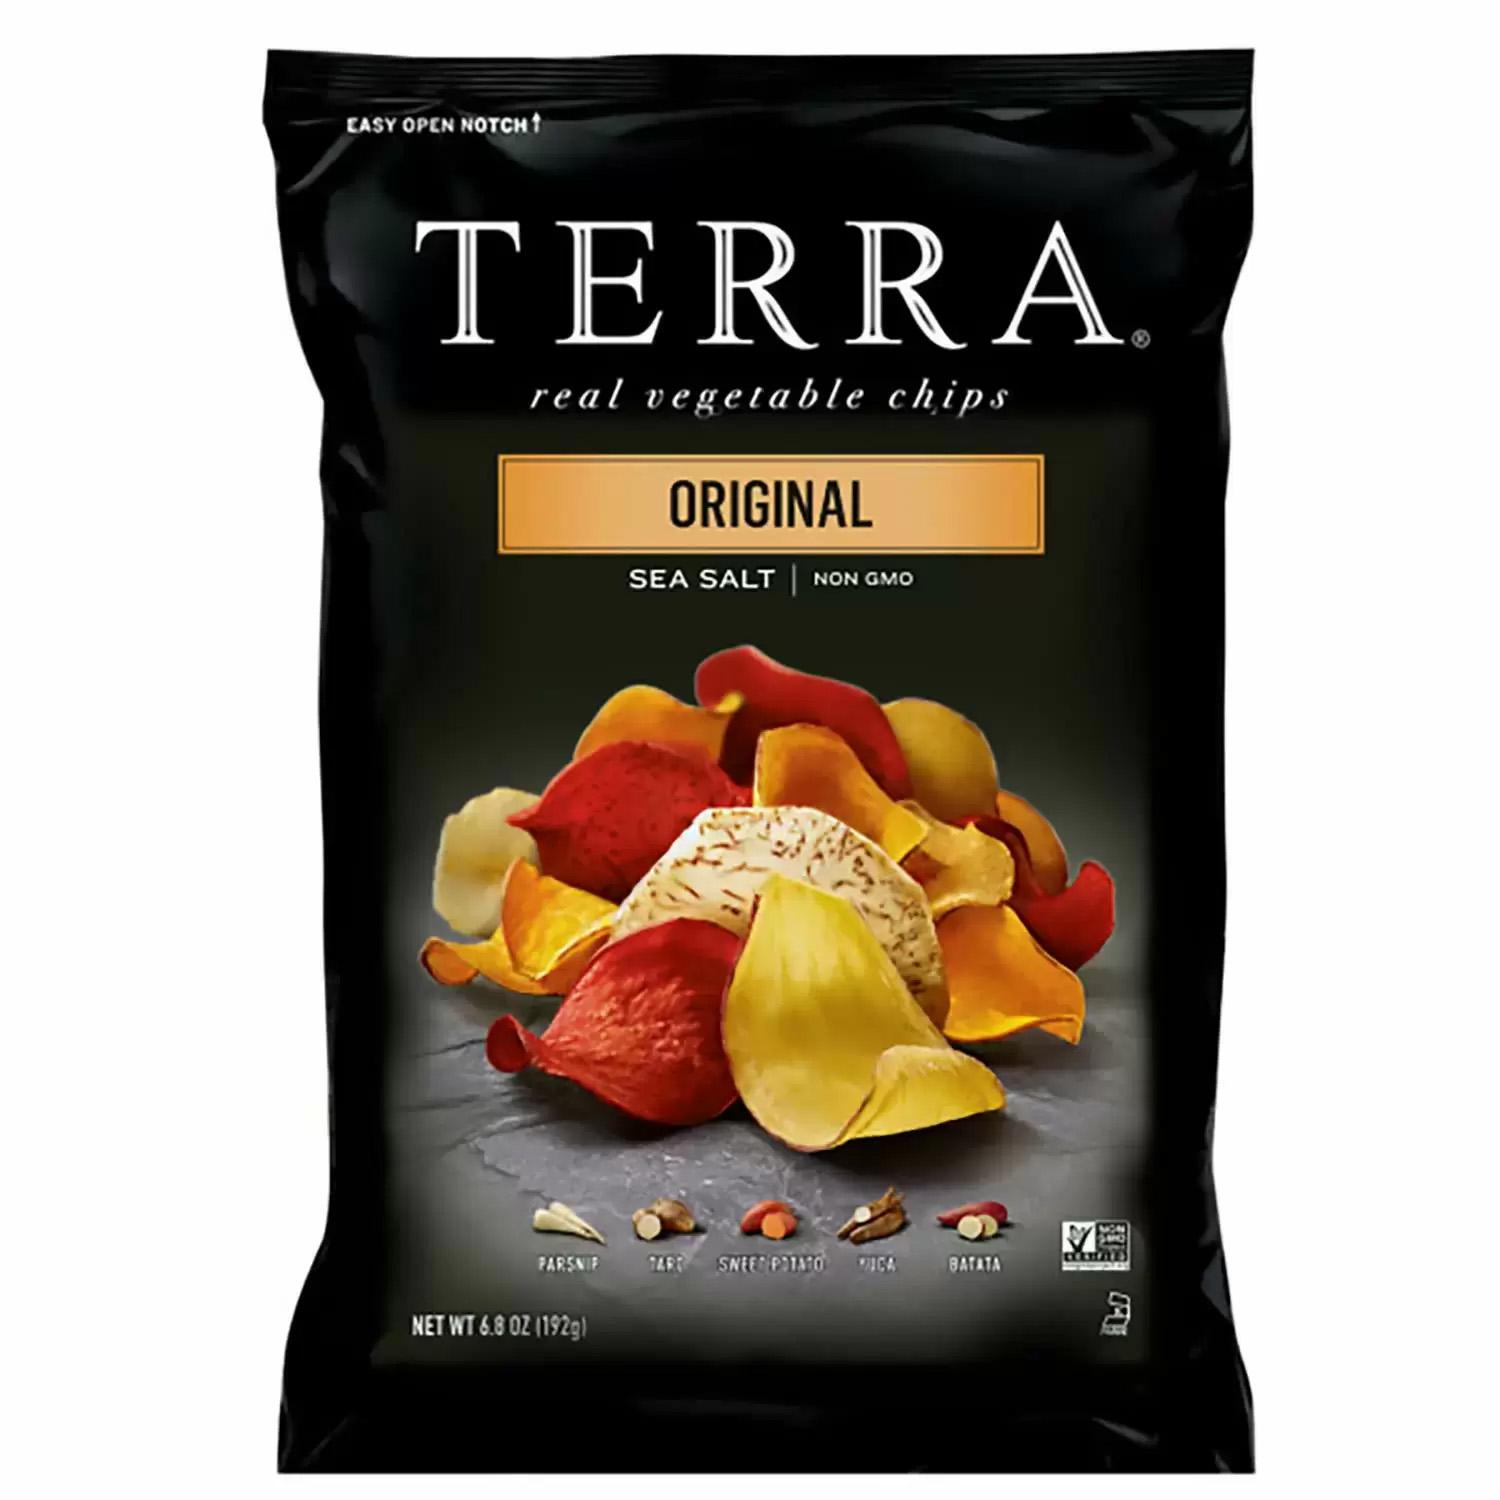 Terra Original Chips with Sea Salt for $2.50